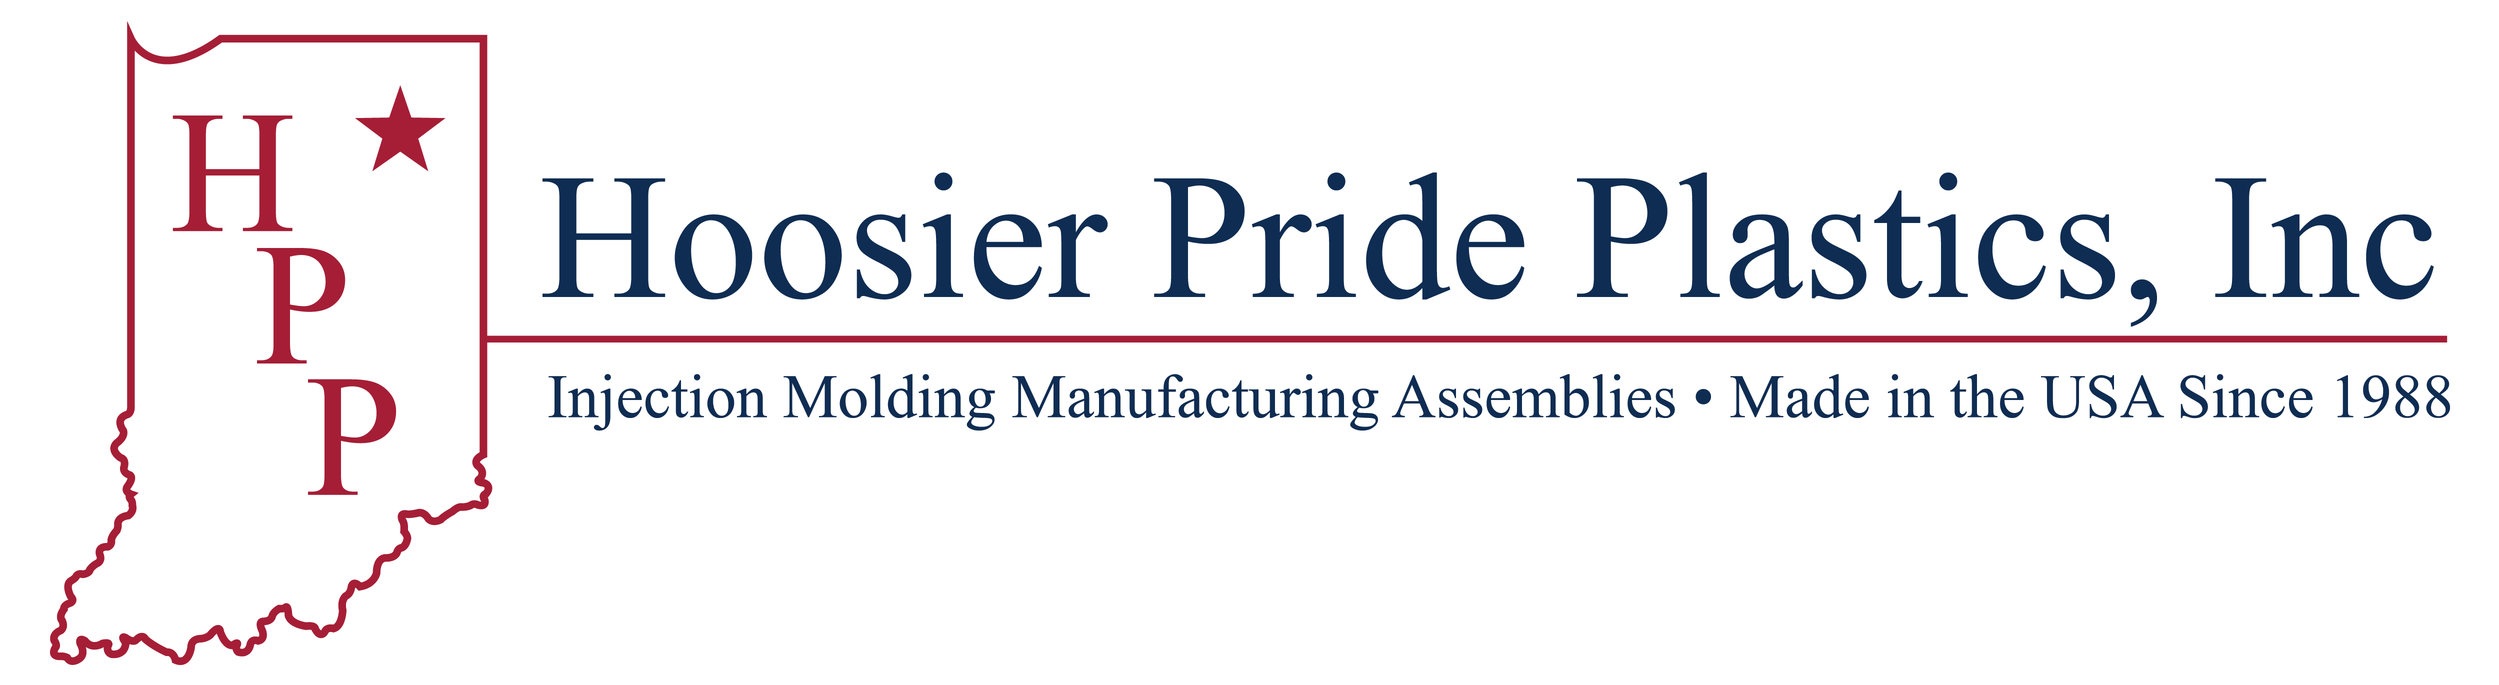 Hoosier Pride Plastics & Companies